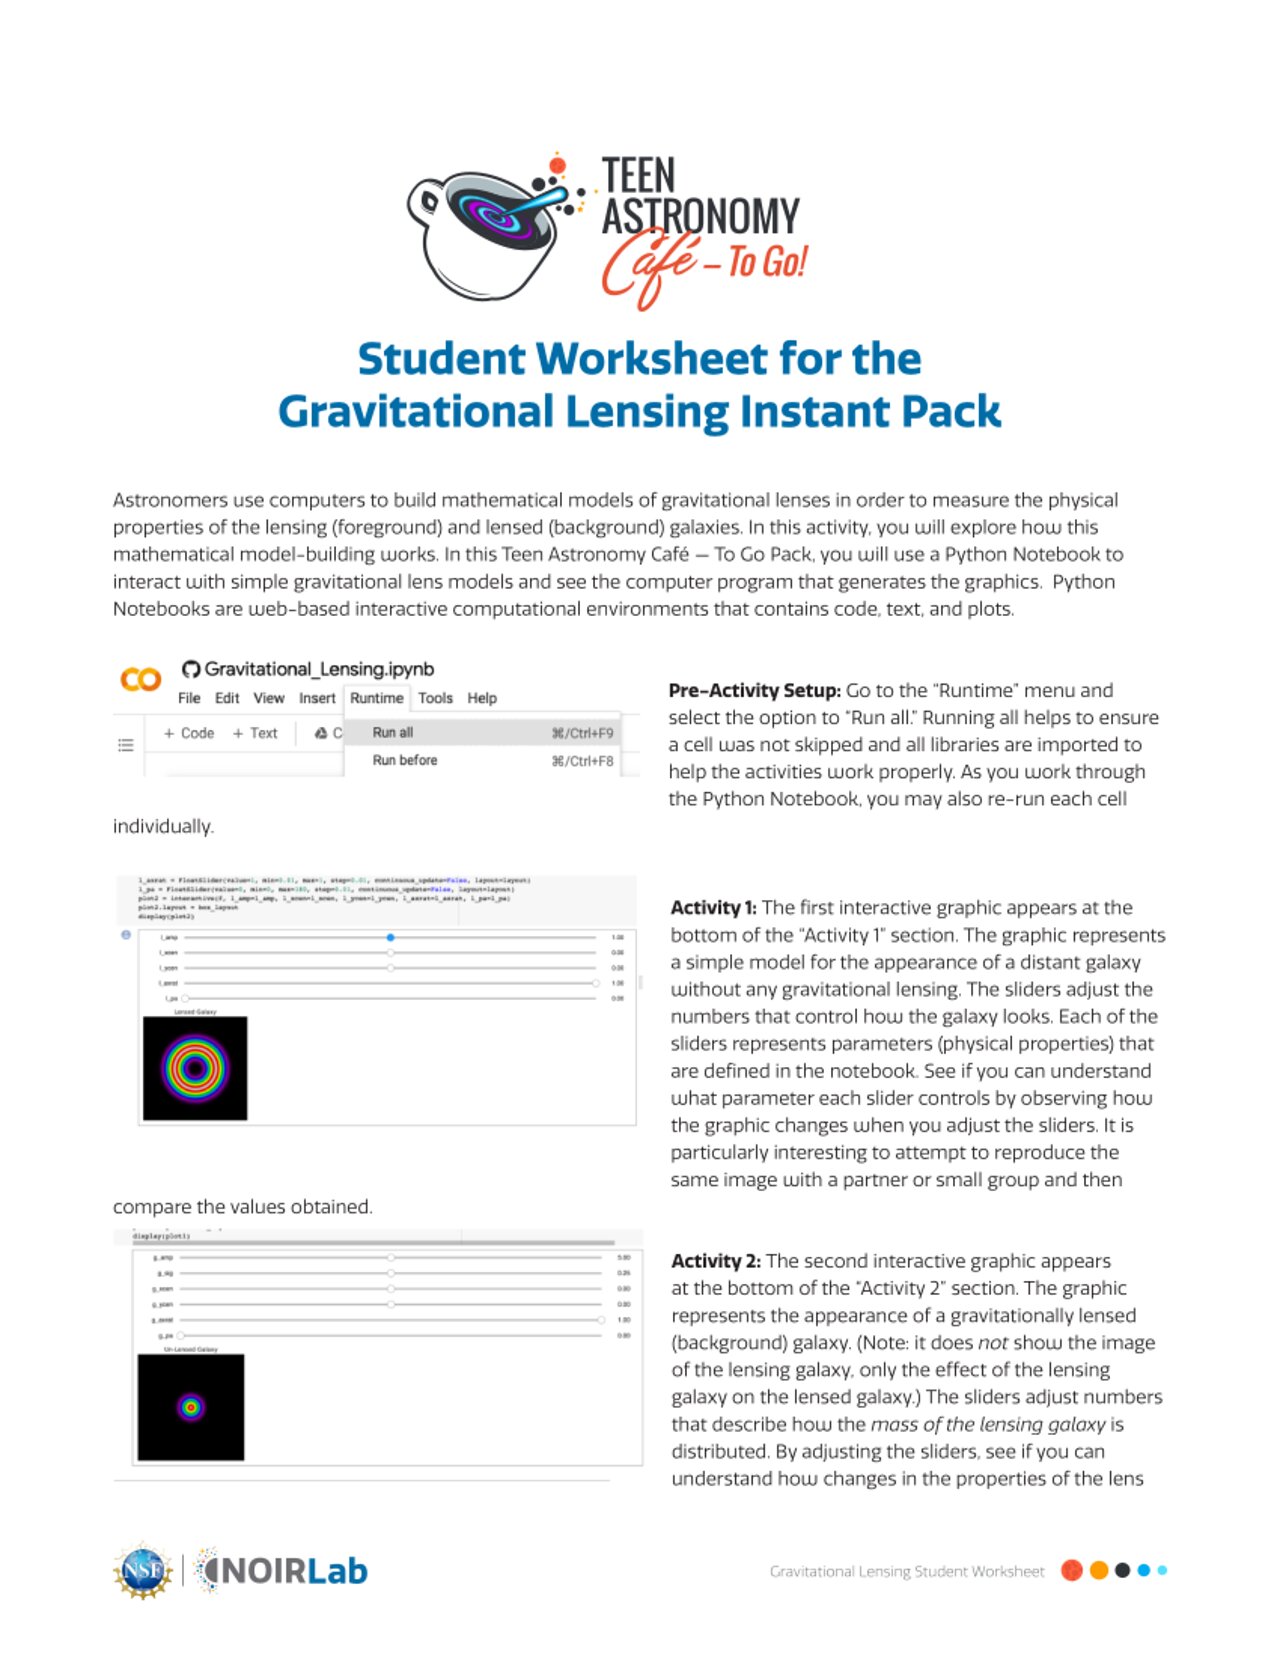 Educational Material: Student Worksheet for the Gravitational Lensing Instant Pack